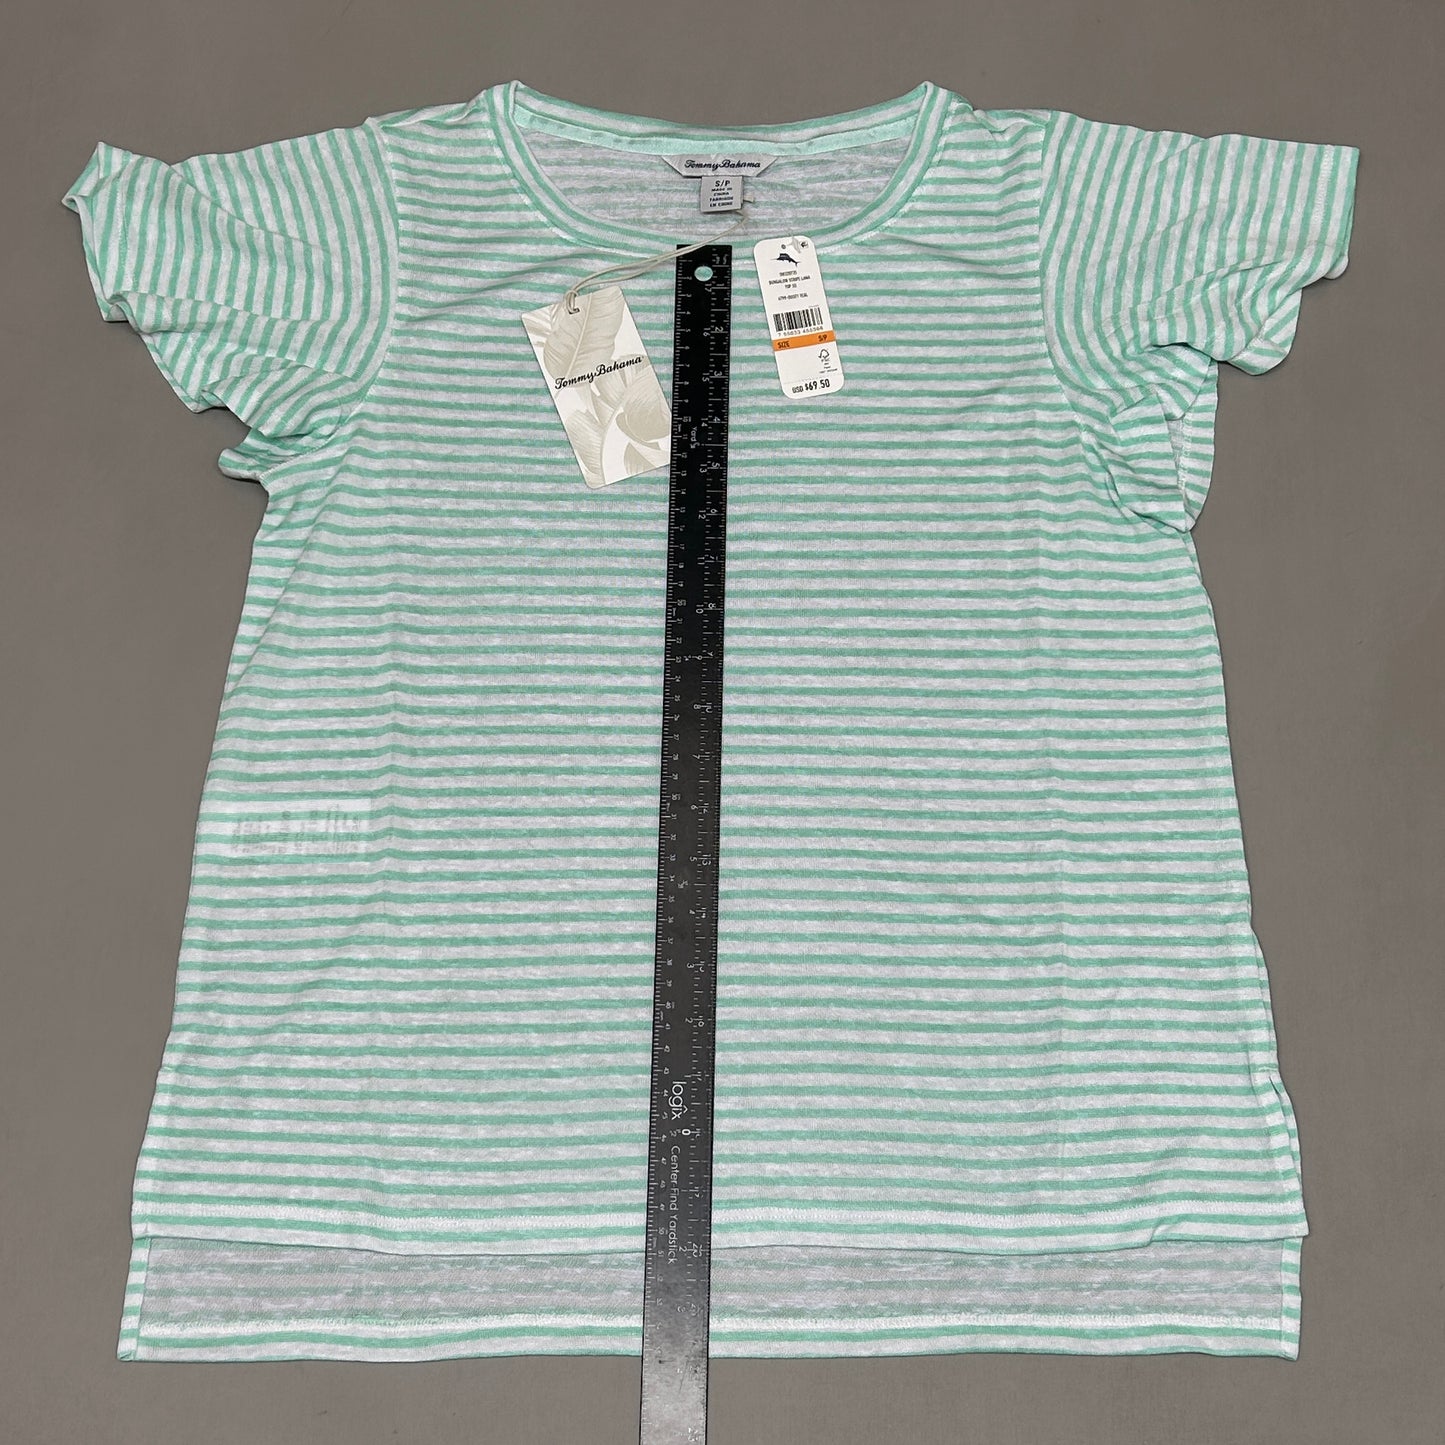 TOMMY BAHAMA Women's Bungalow Stripe Lana Top Short Sleeve Green/White Size S (New)